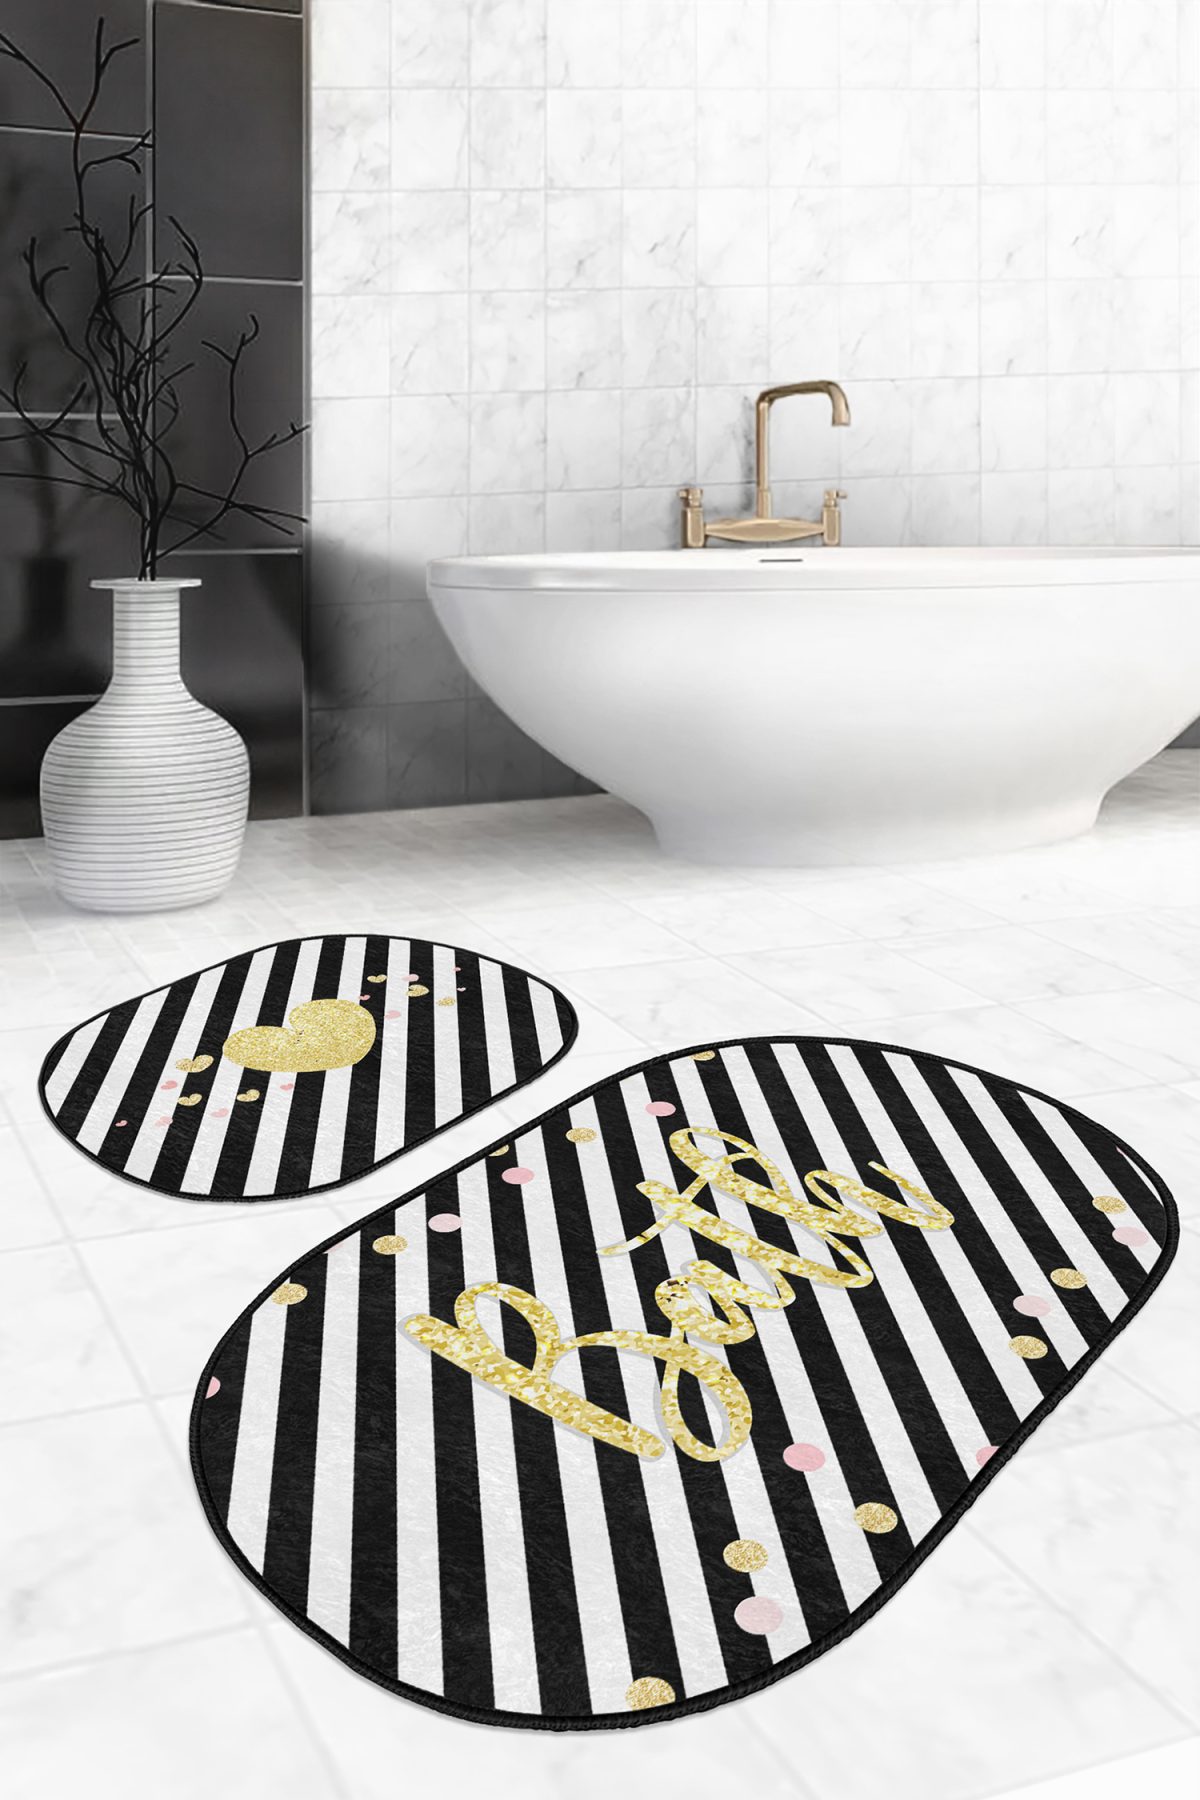 Siyah Beyaz Çizgili Gold Detaylı 2'li Oval Kaymaz Tabanlı Banyo & Mutfak Paspas Takımı Realhomes